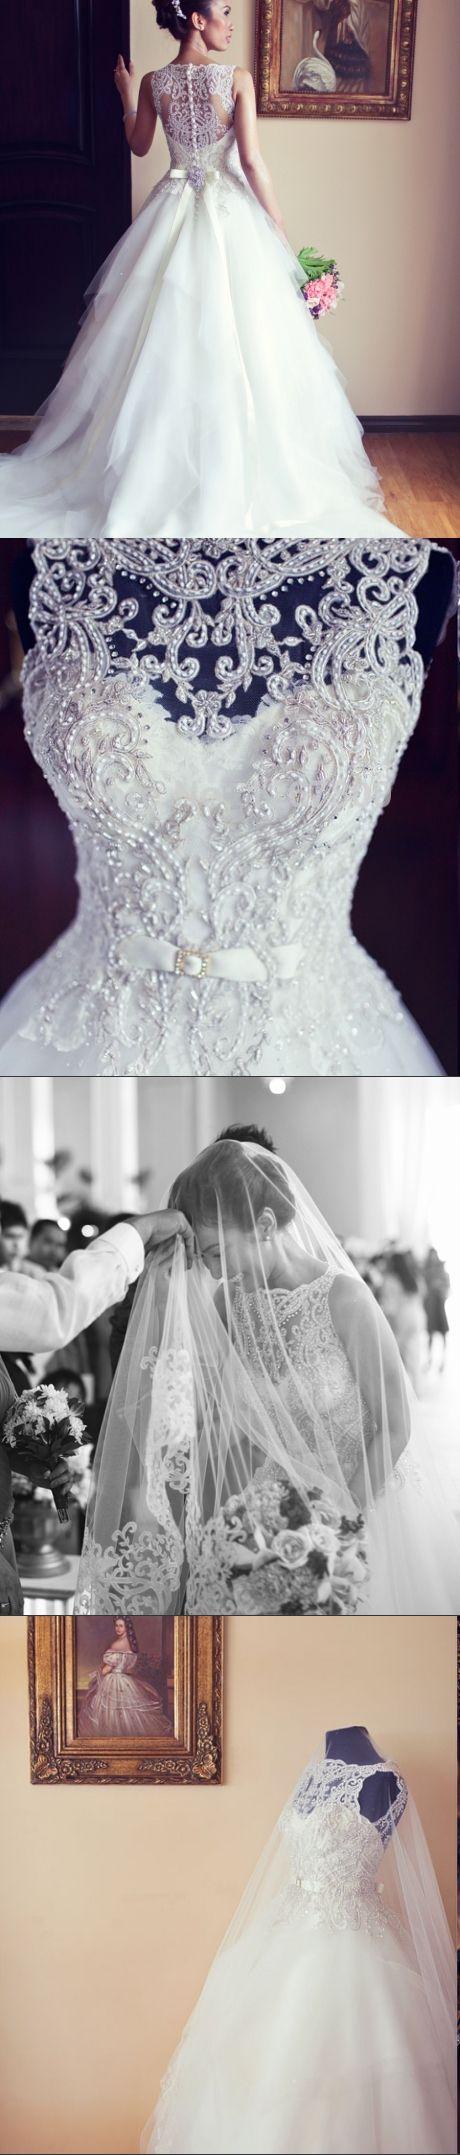 Mariage - Ball Gown White Wedding Dress,V Neck Wedding Dress,White Wedding Gown,White Bridal Dress,Sexy Bridal Dress,Wedding Party Dress RE109 From Dresscomeon